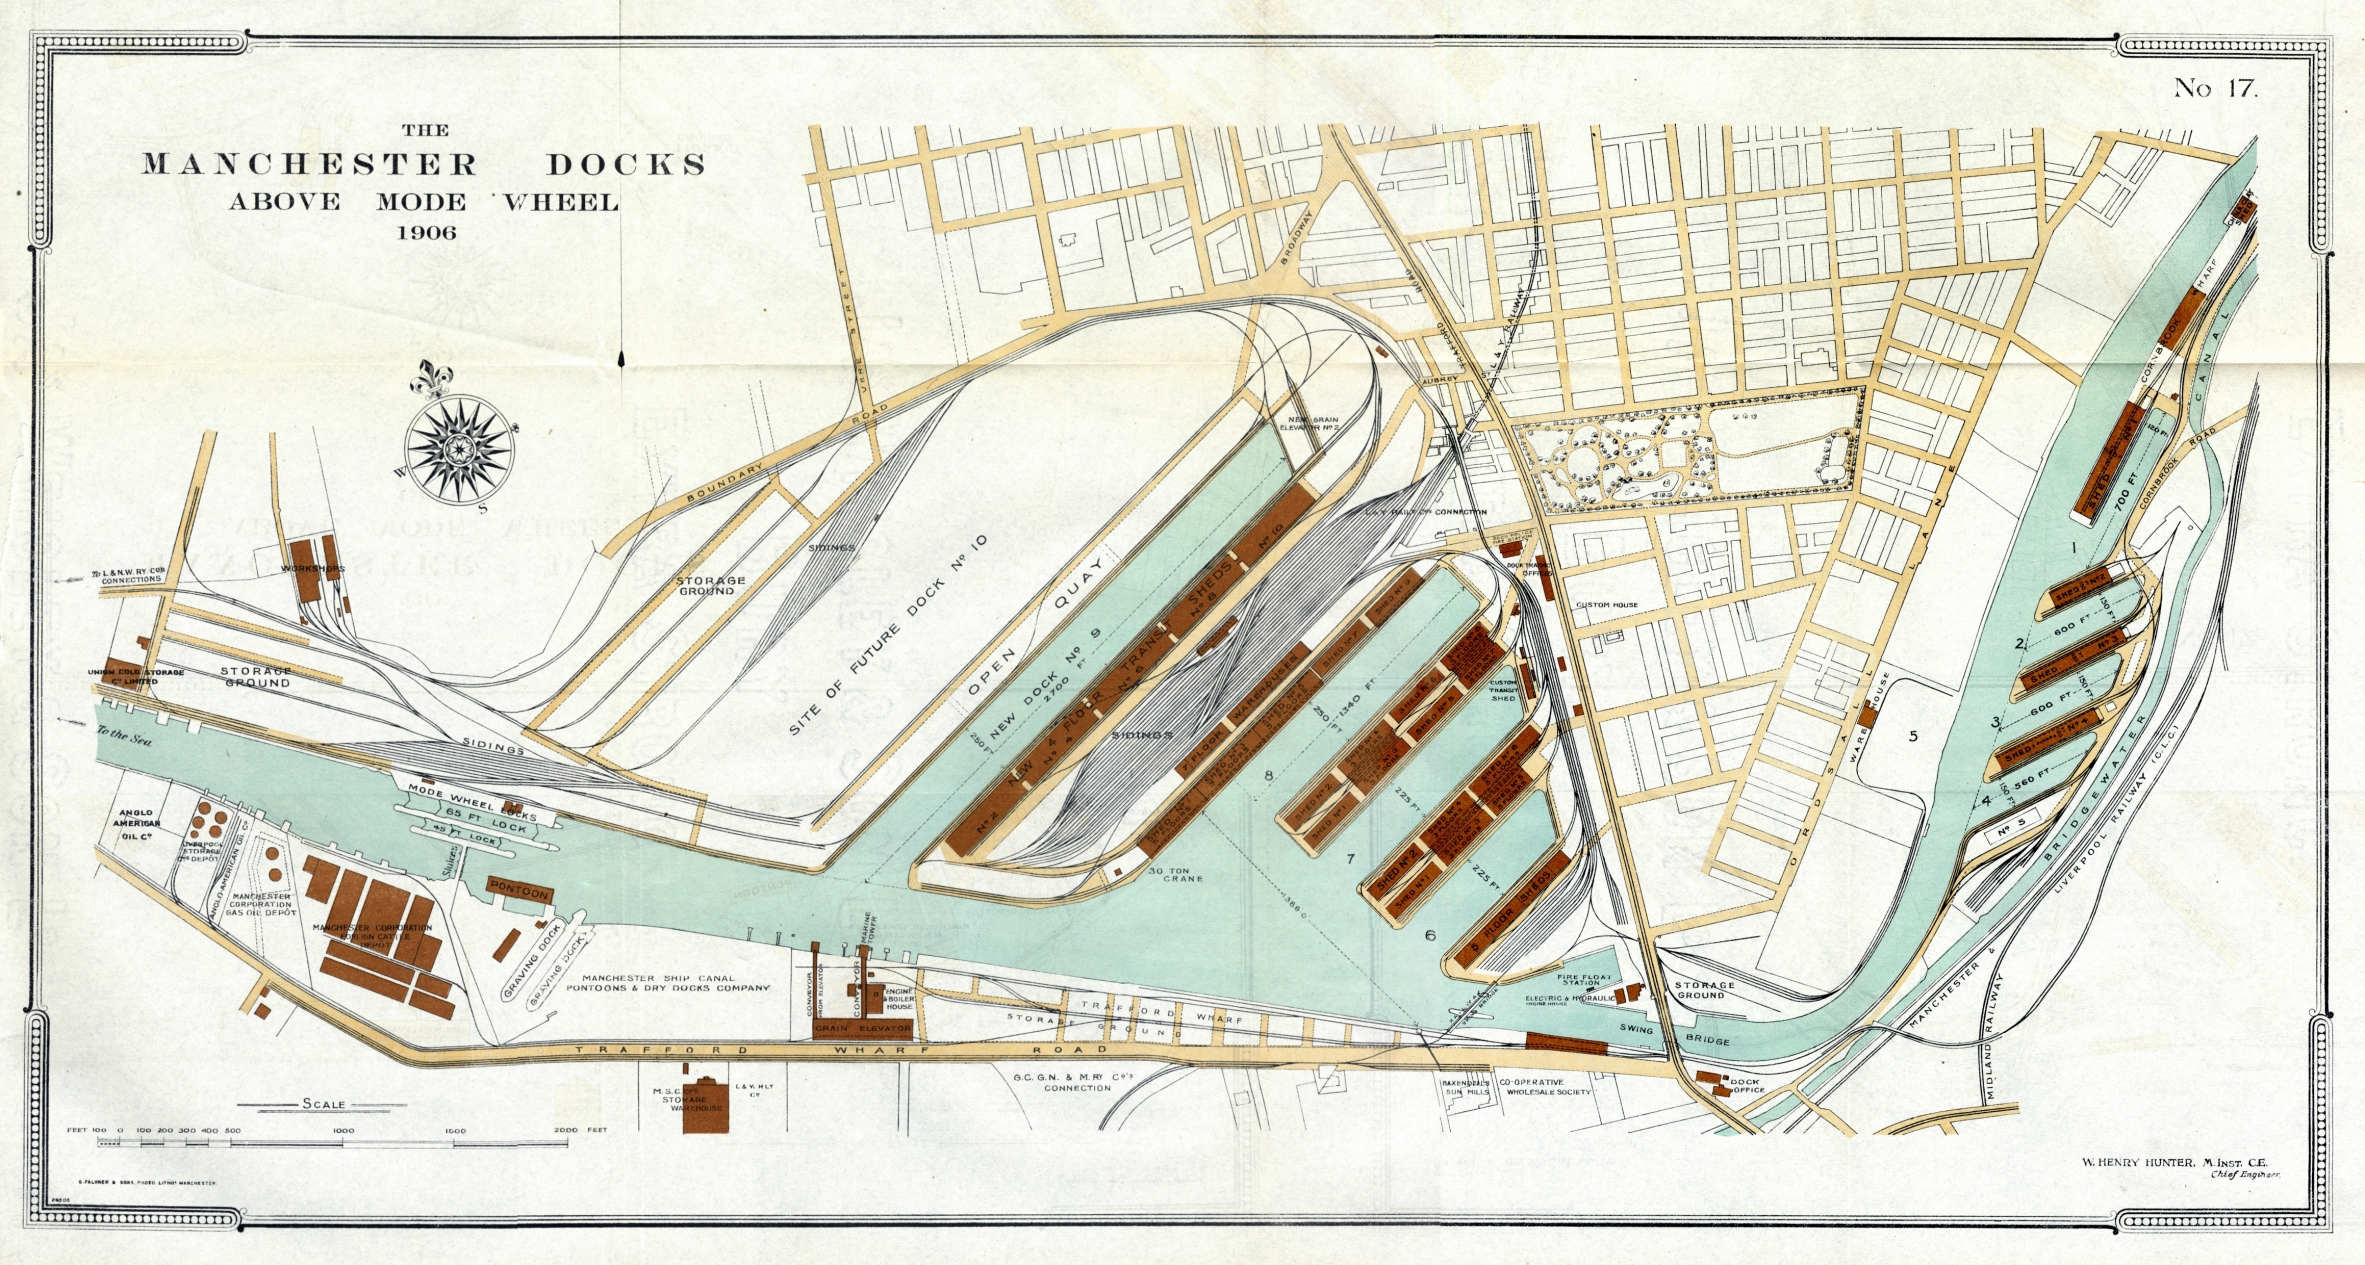 Manchester docks in Salford plan